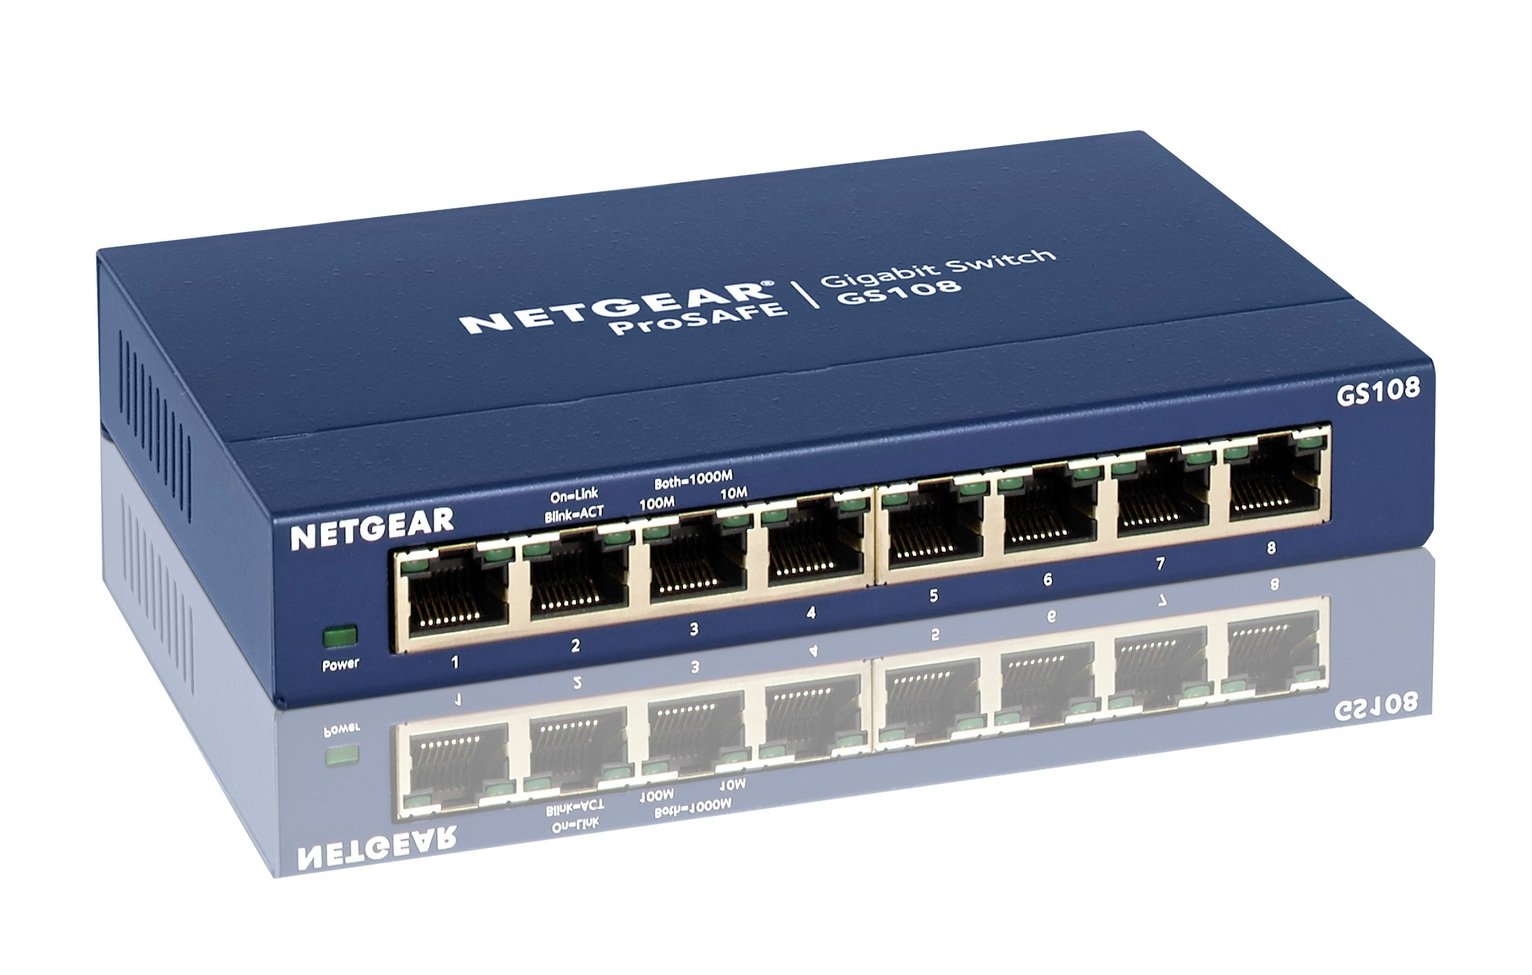 Netgear 8 Port Ethernet Gigabit Switch Review